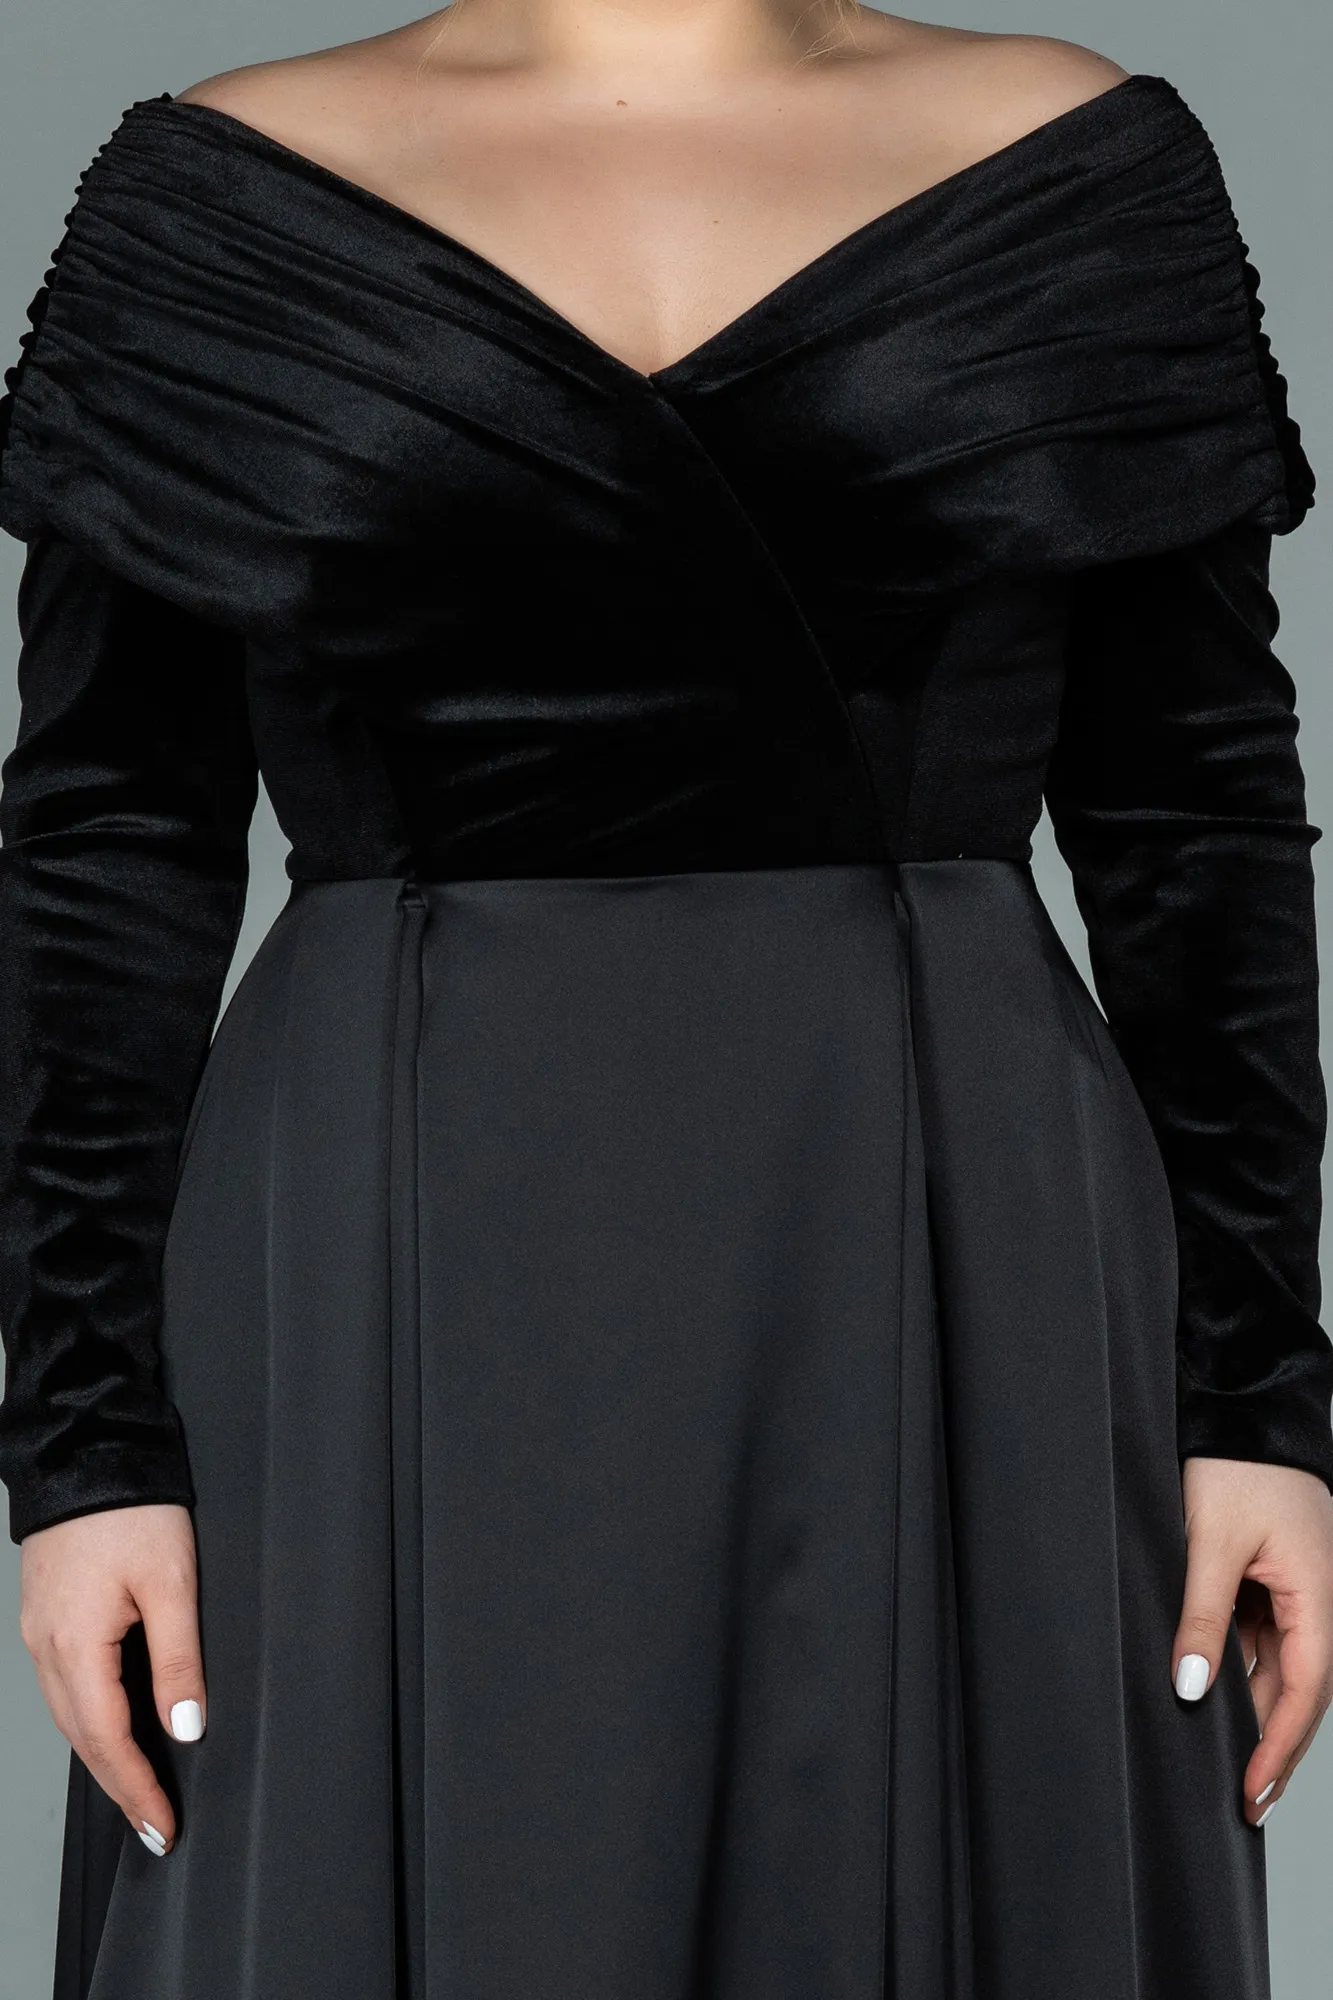 Black-Long Oversized Evening Dress ABU2084